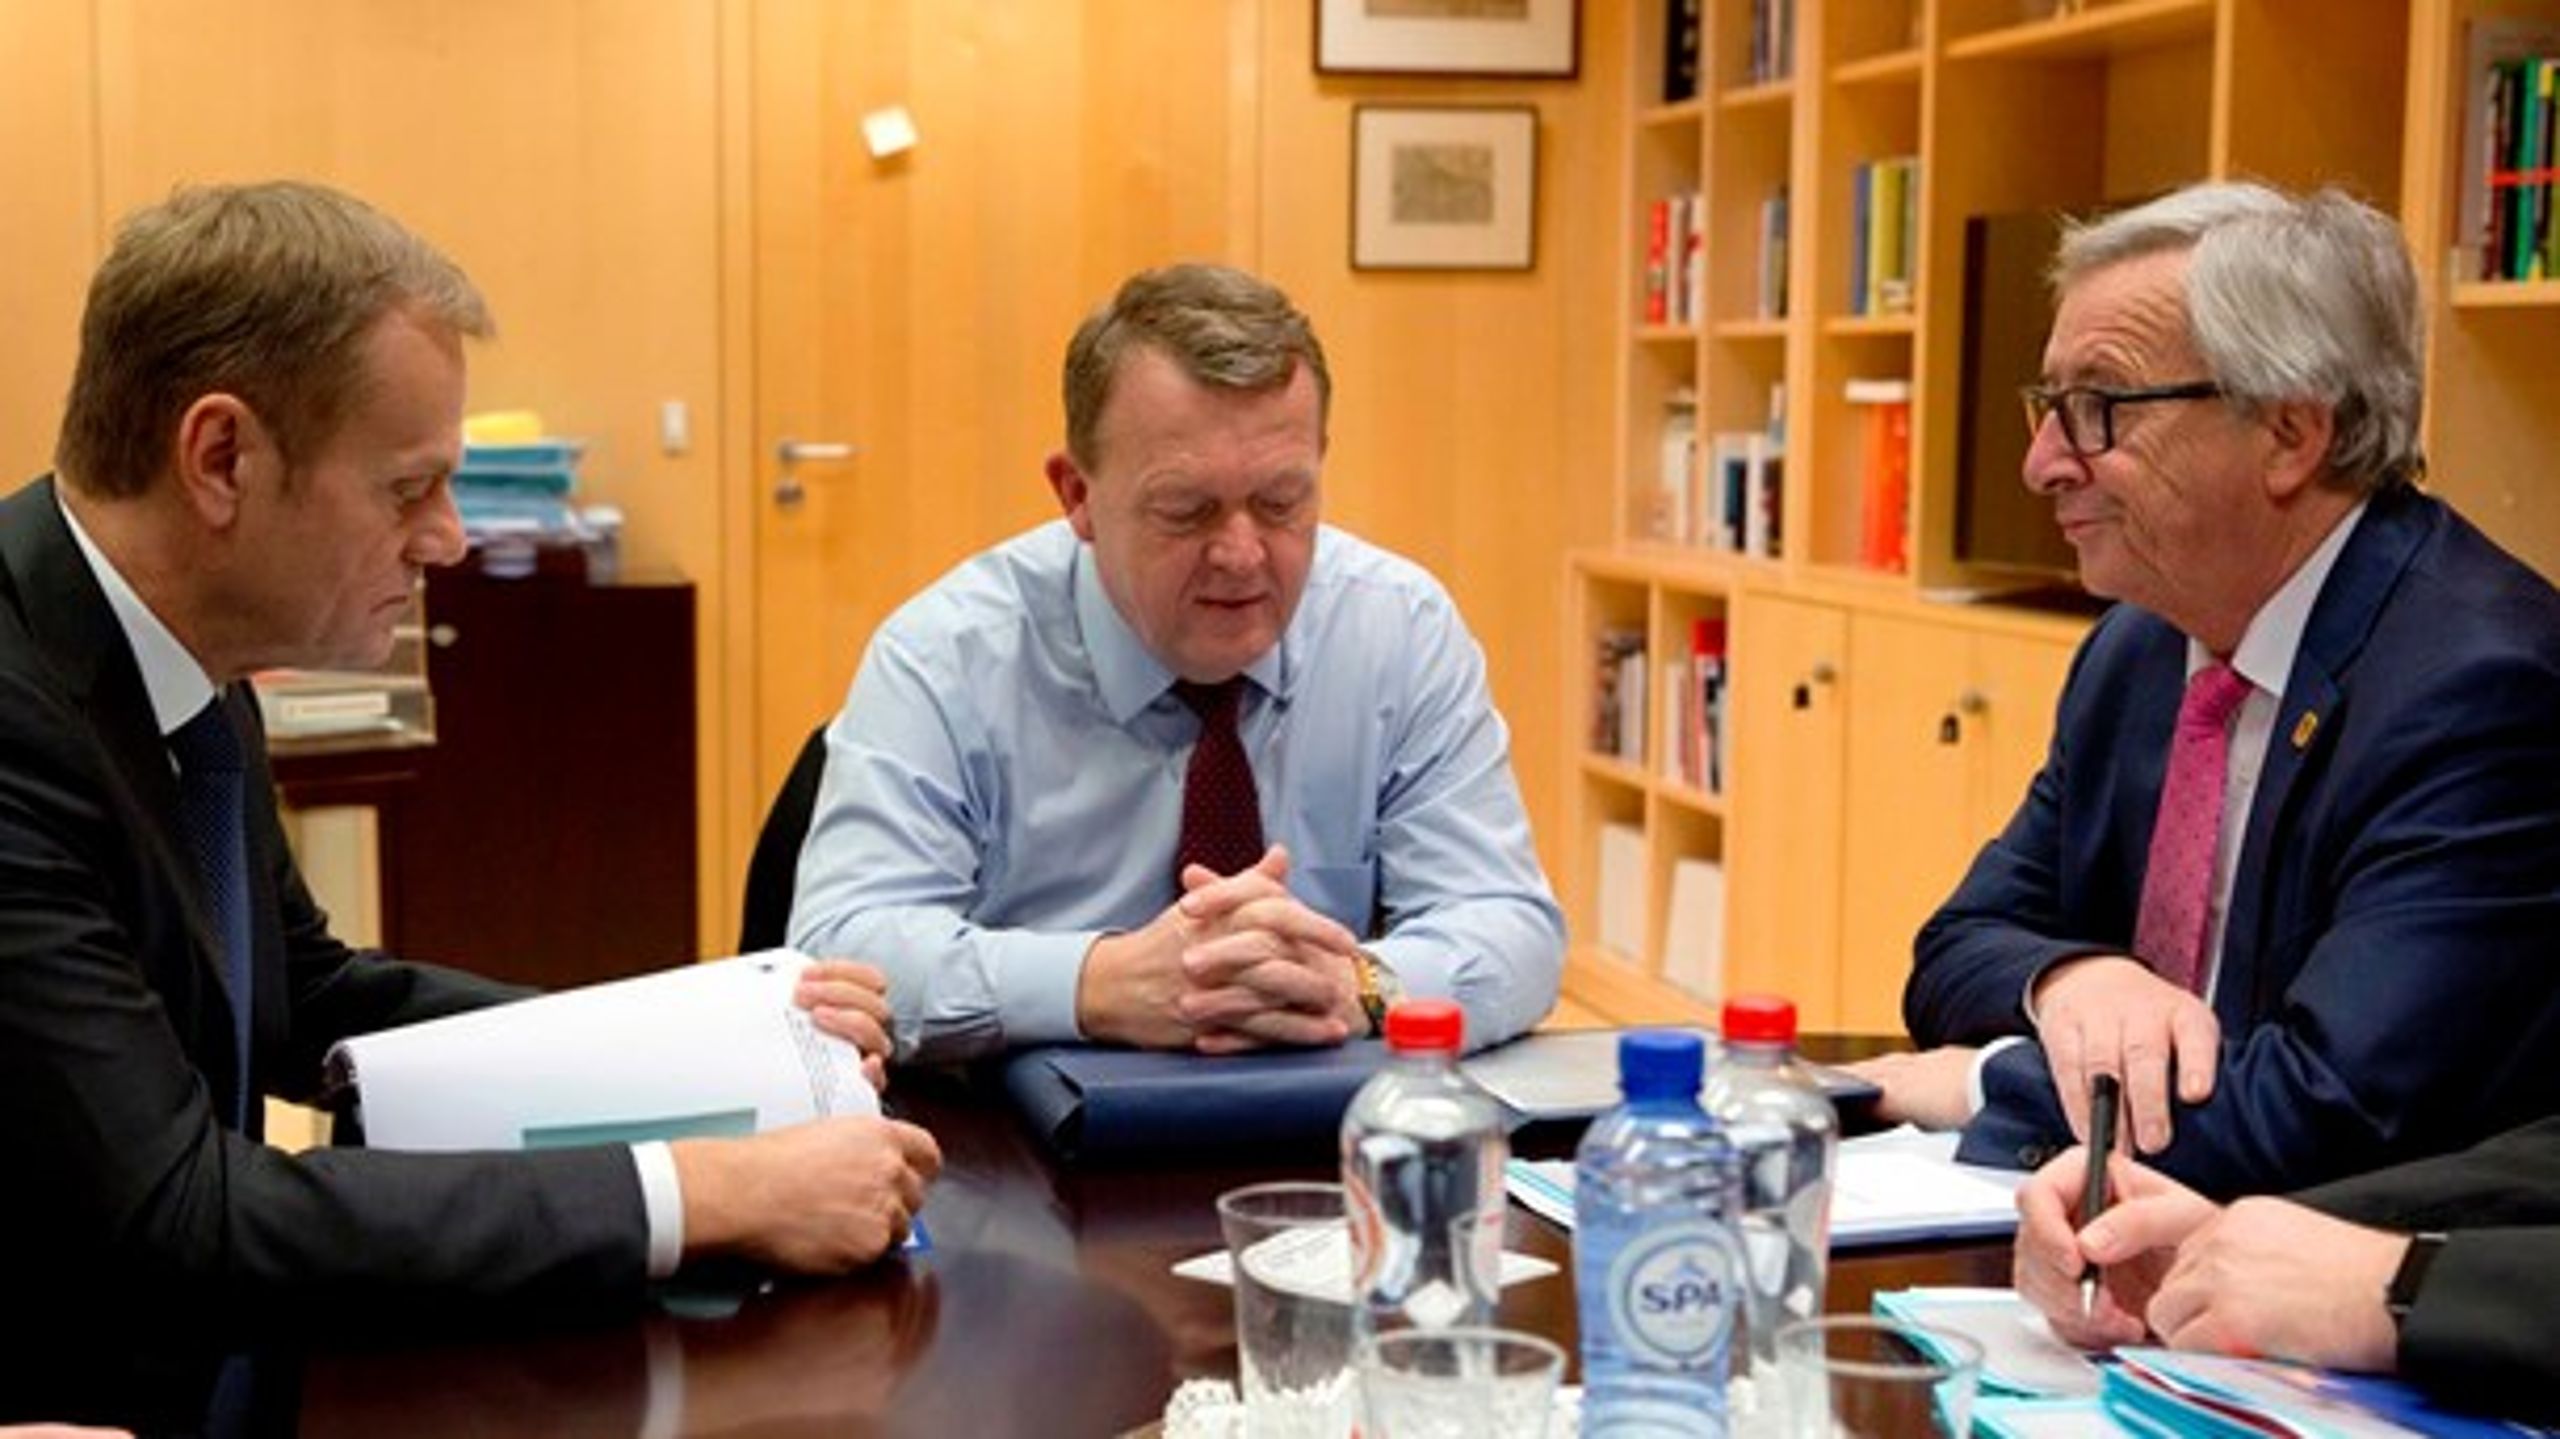 Torsdag formmiddag mødtes statsminister Lars Løkke Rasmussen (V) med formanden for Det Europæiske Råd Donald Tusk og EU-Kommissionens formand Jean-Claude Juncker for at diskutere Europol.